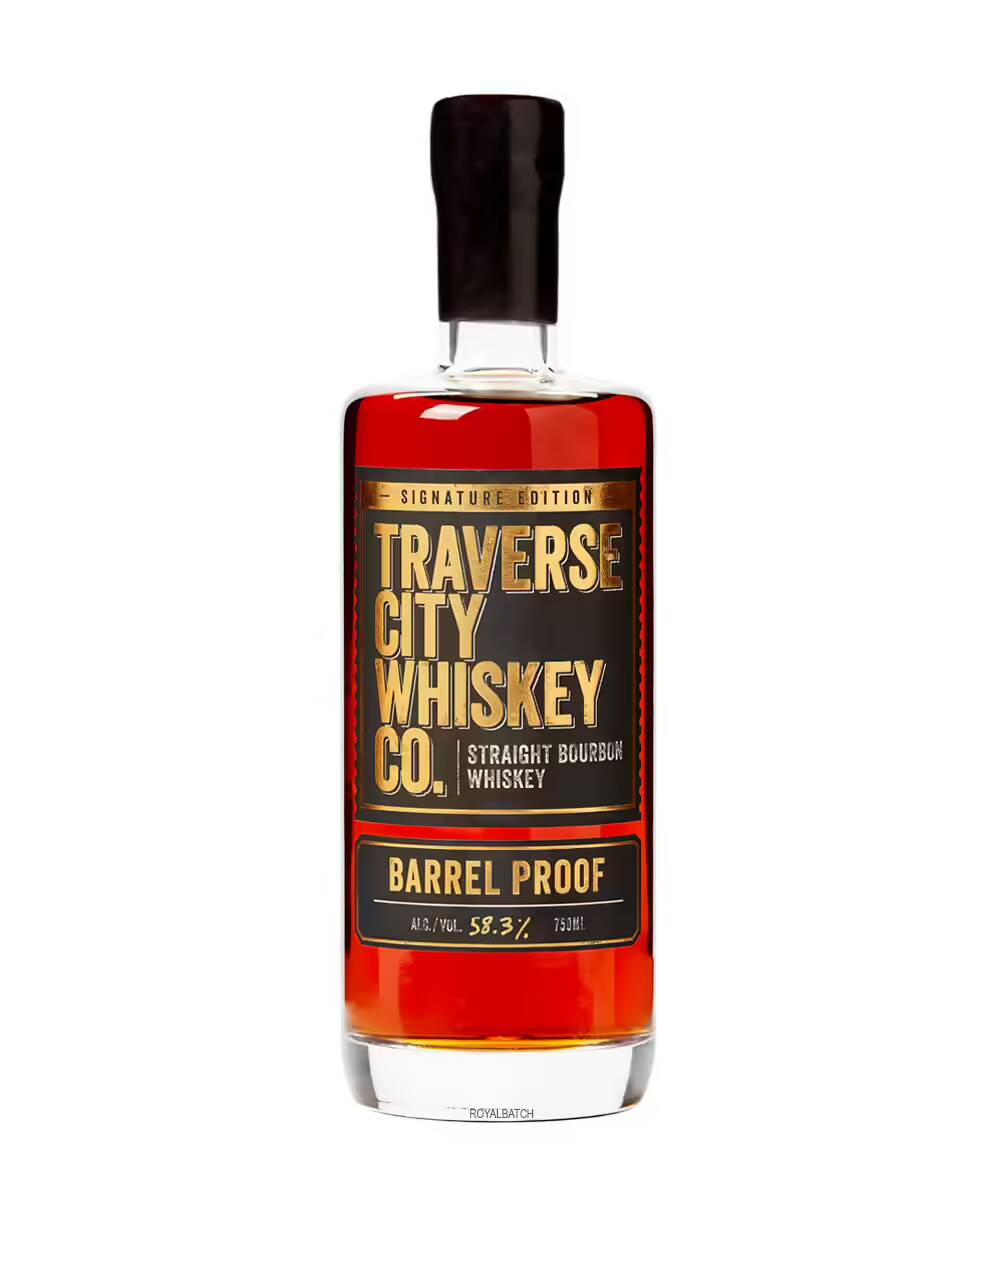 Traverse City Whiskey Co. Barrel Proof Bourbon Whiskey